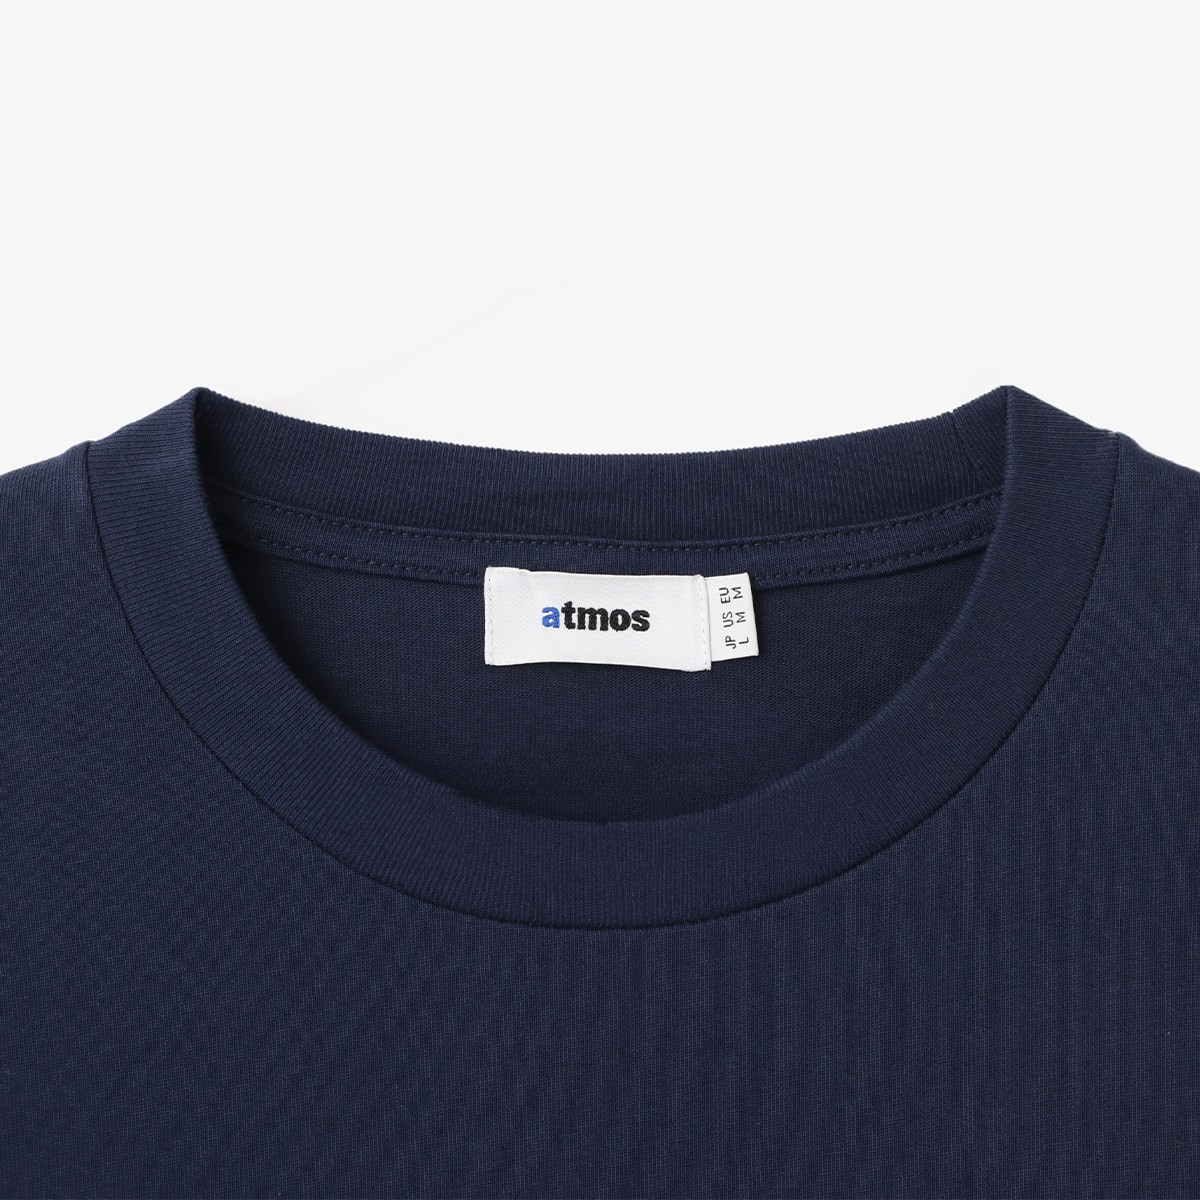 atmos Patch Logo T-Shirt Navy - ネイビー - M